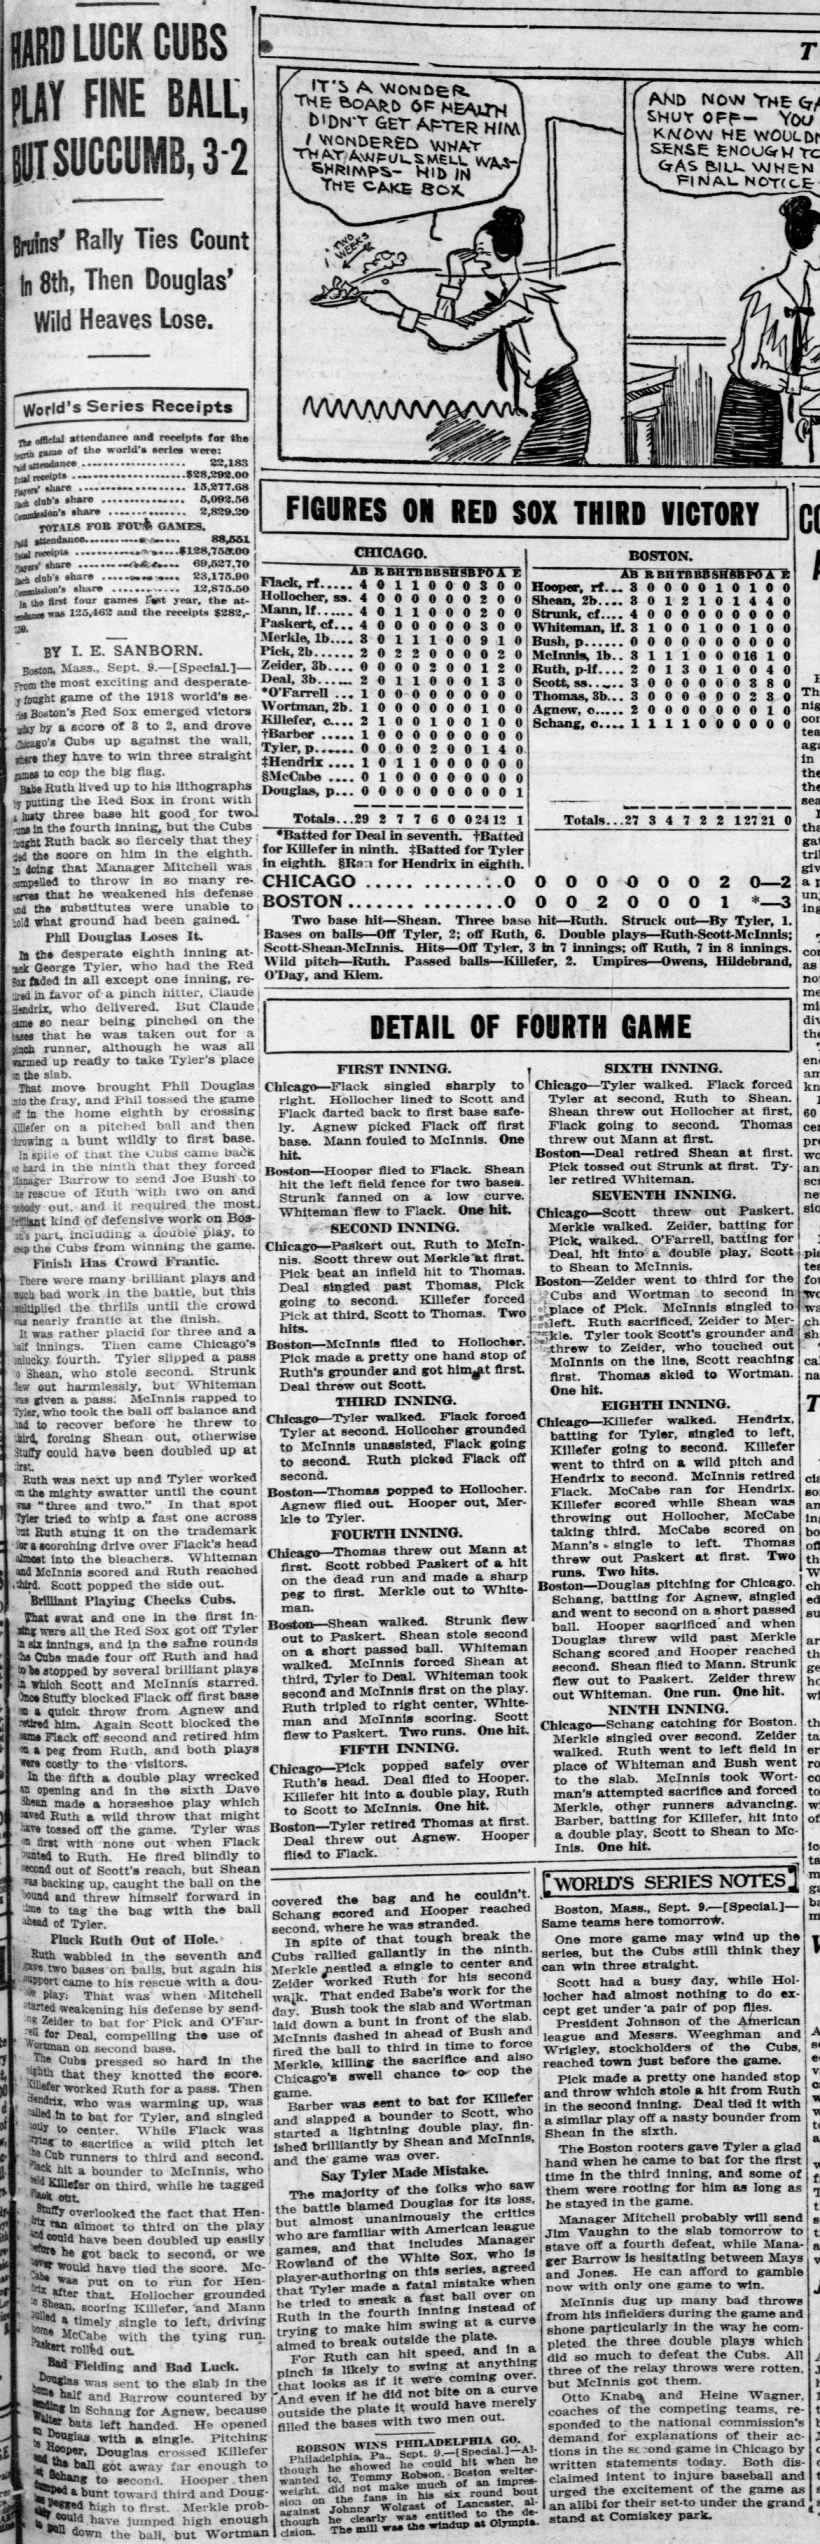 1918 World Series game 4